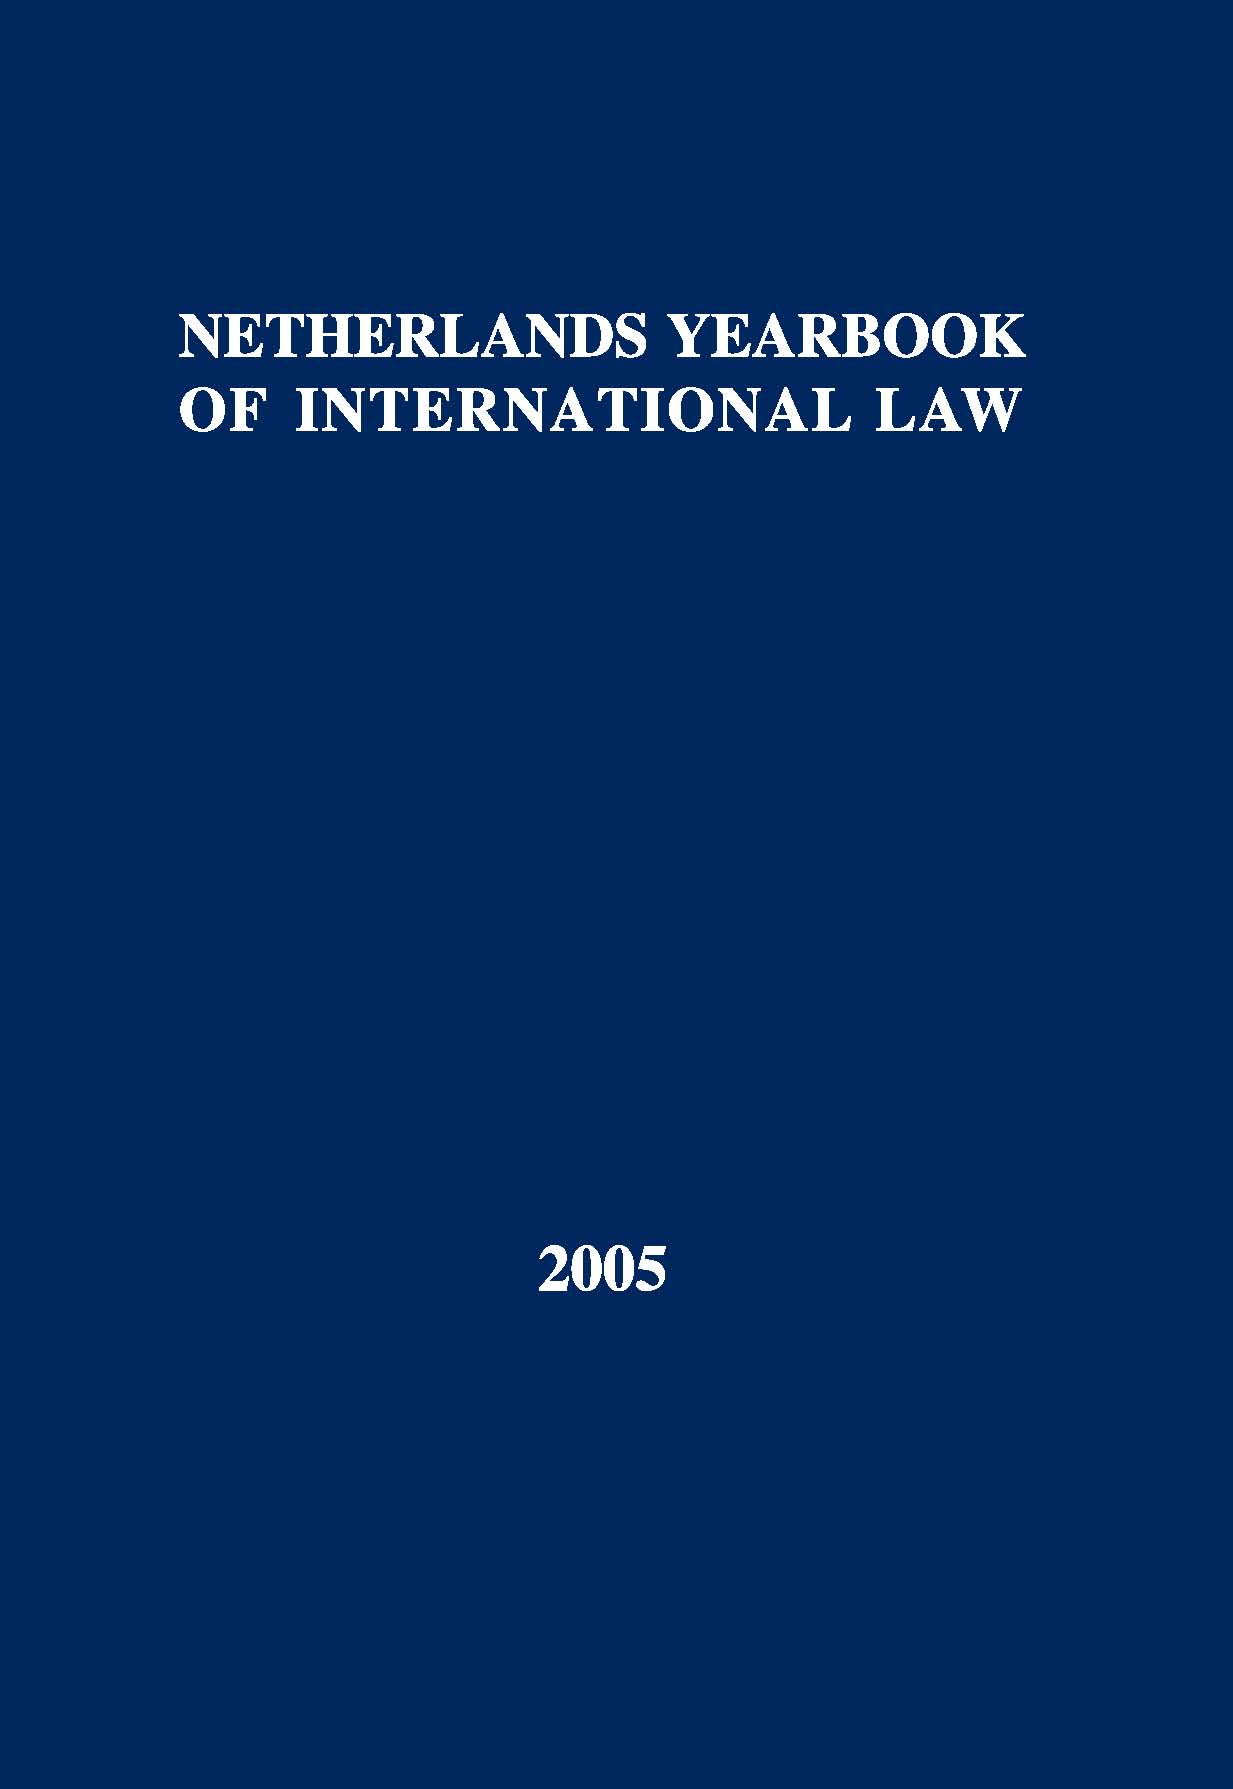 Netherlands Yearbook of International Law 2005, Volume 36